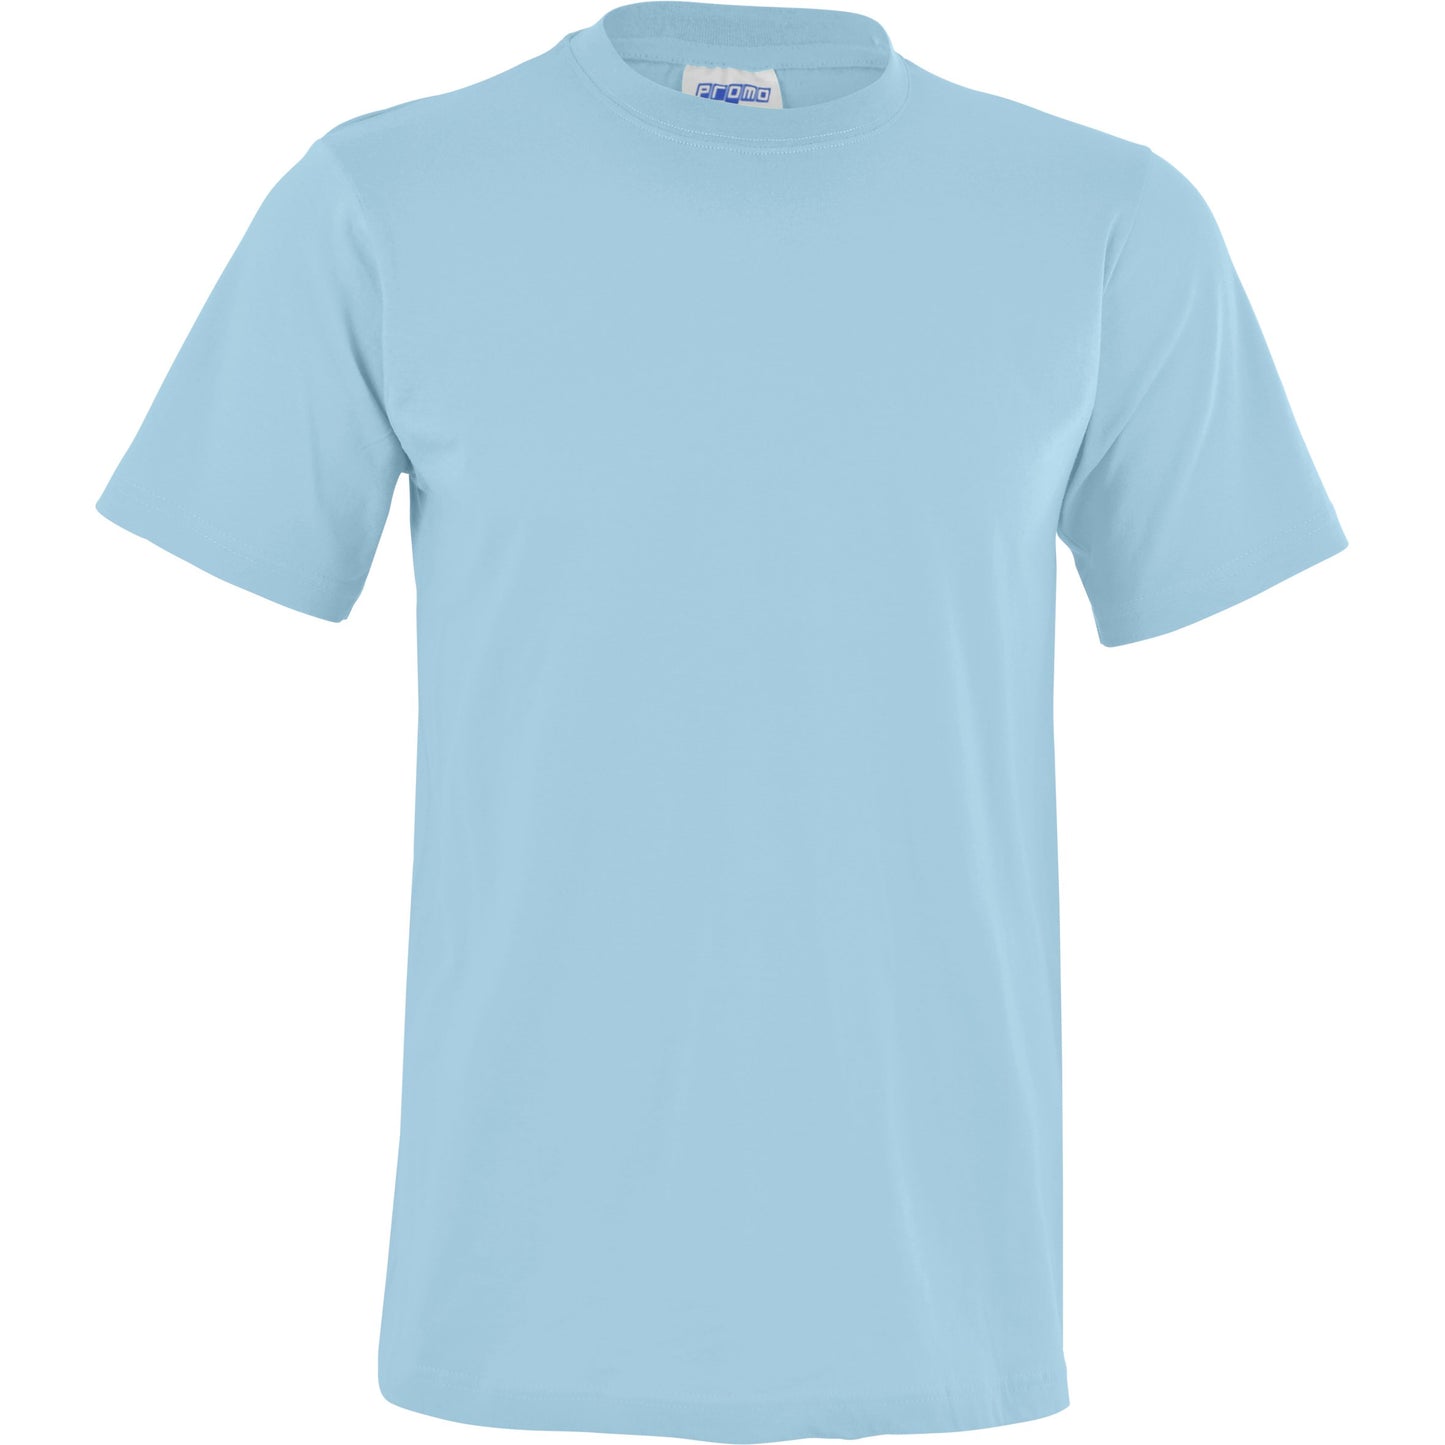 Unisex Promo T-Shirt  - Sky Blue Only